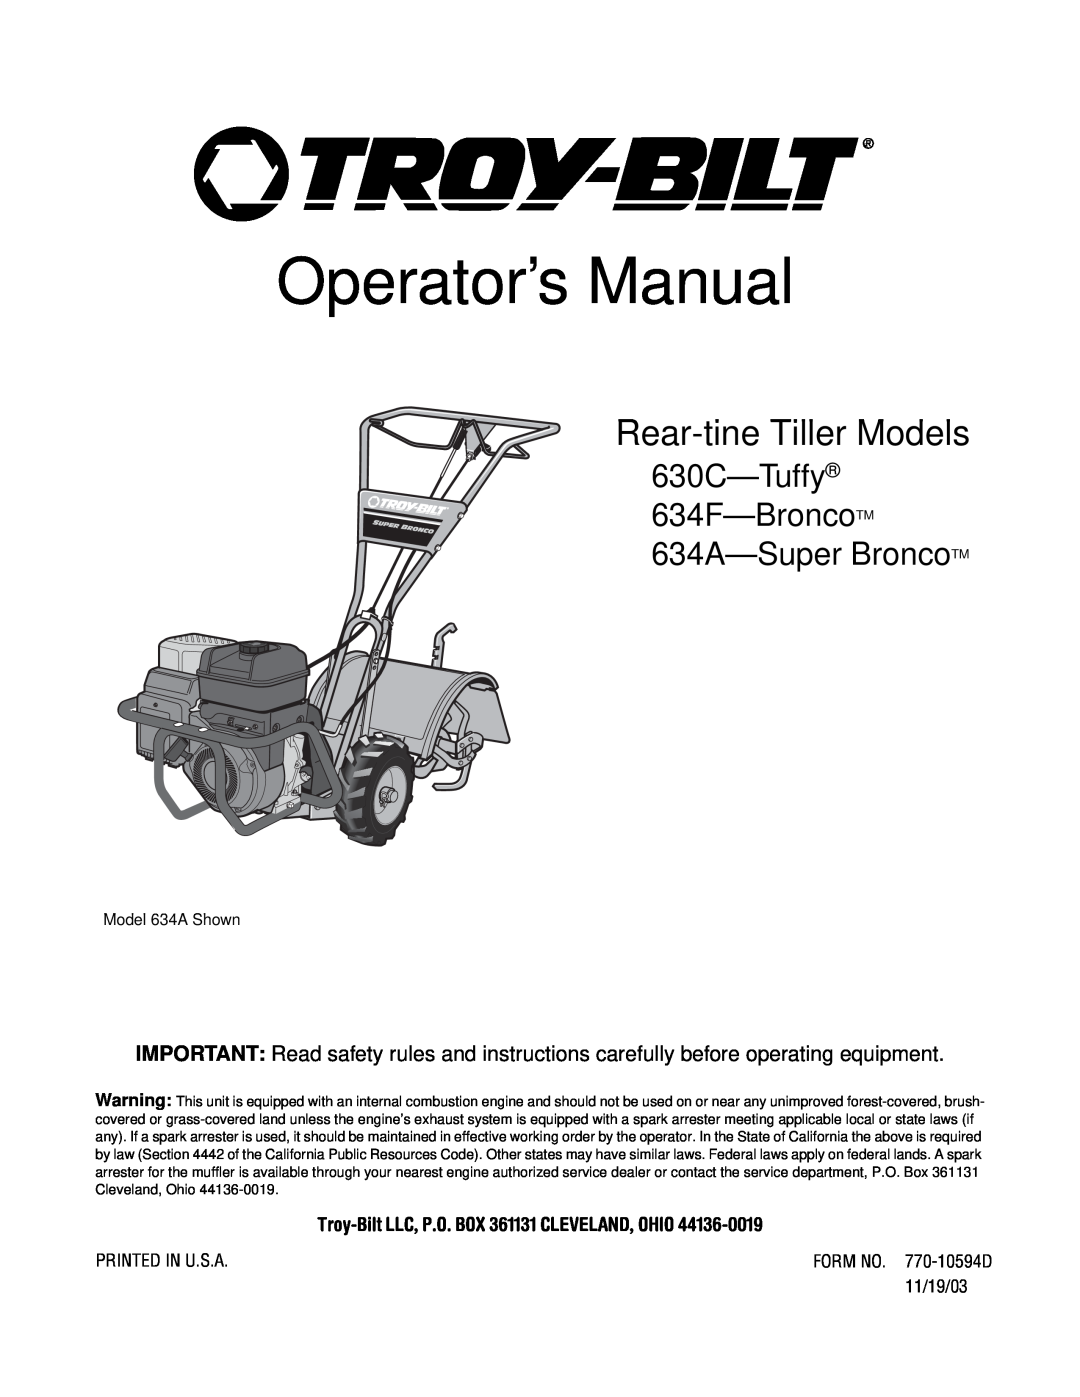 Troy-Bilt manual Operator’s Manual, Rear-tine Tiller Models, 630C-Tuffy 634F-Bronco TM 634A-Super Bronco TM 